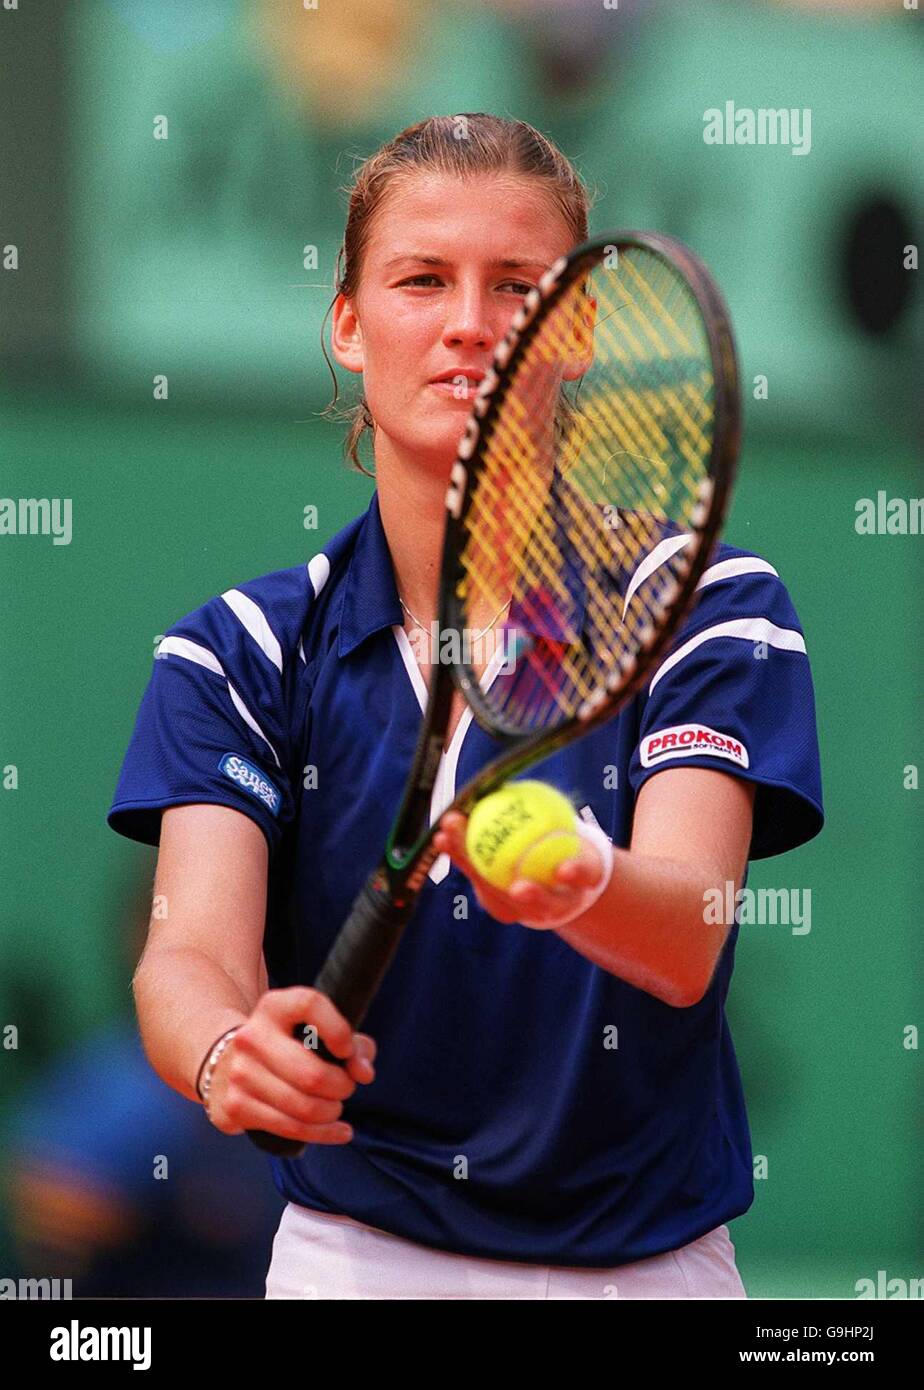 Tennis - Französisch Open Roland Garros 2000. Magdalena Grzybowska im Kampf  gegen Anke Huber Stockfotografie - Alamy